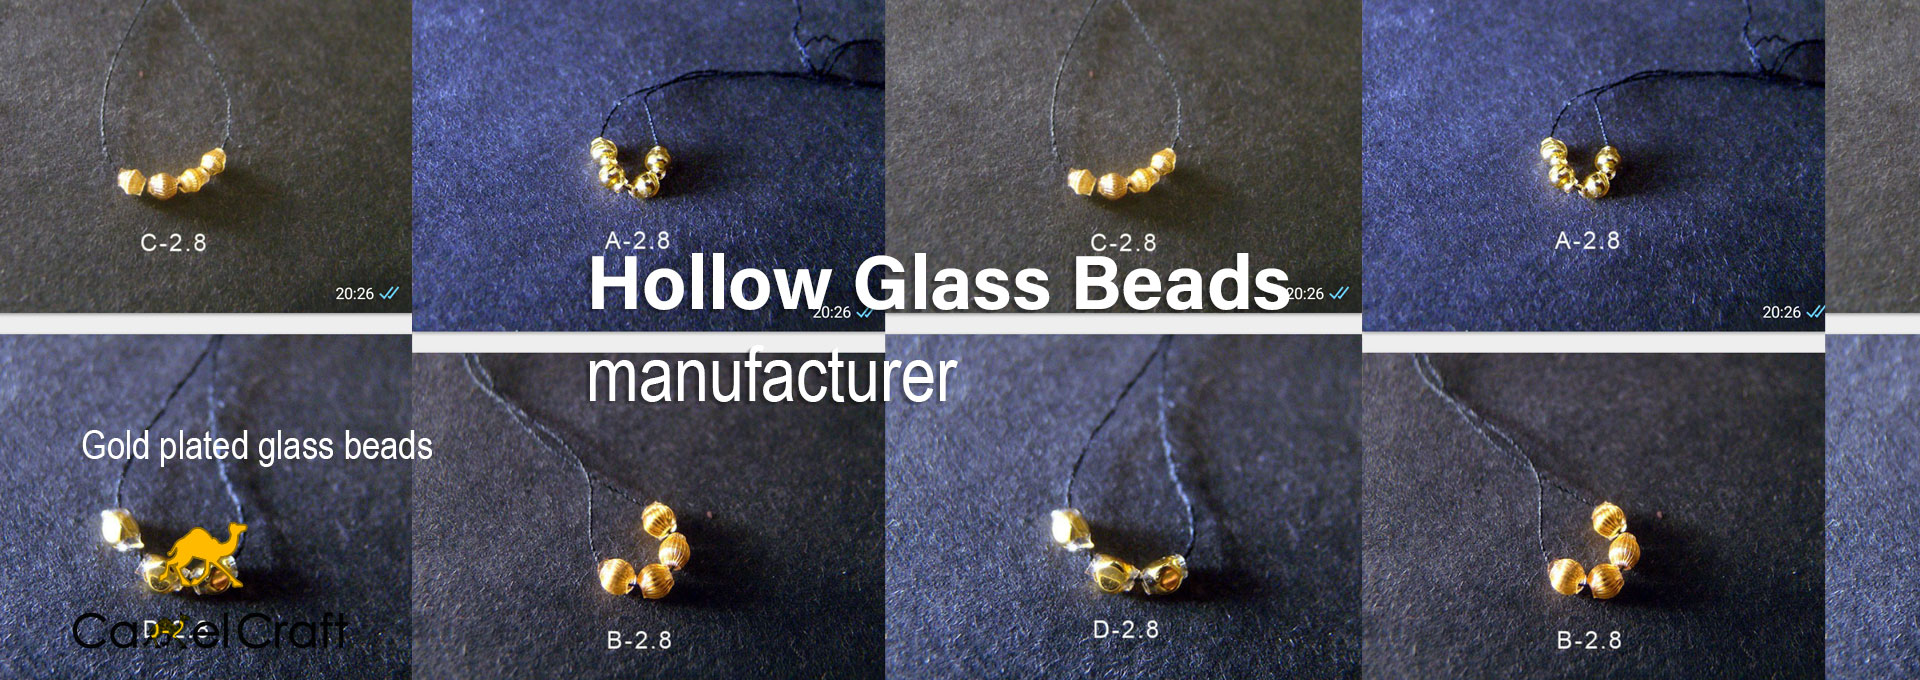 hollow glass beads